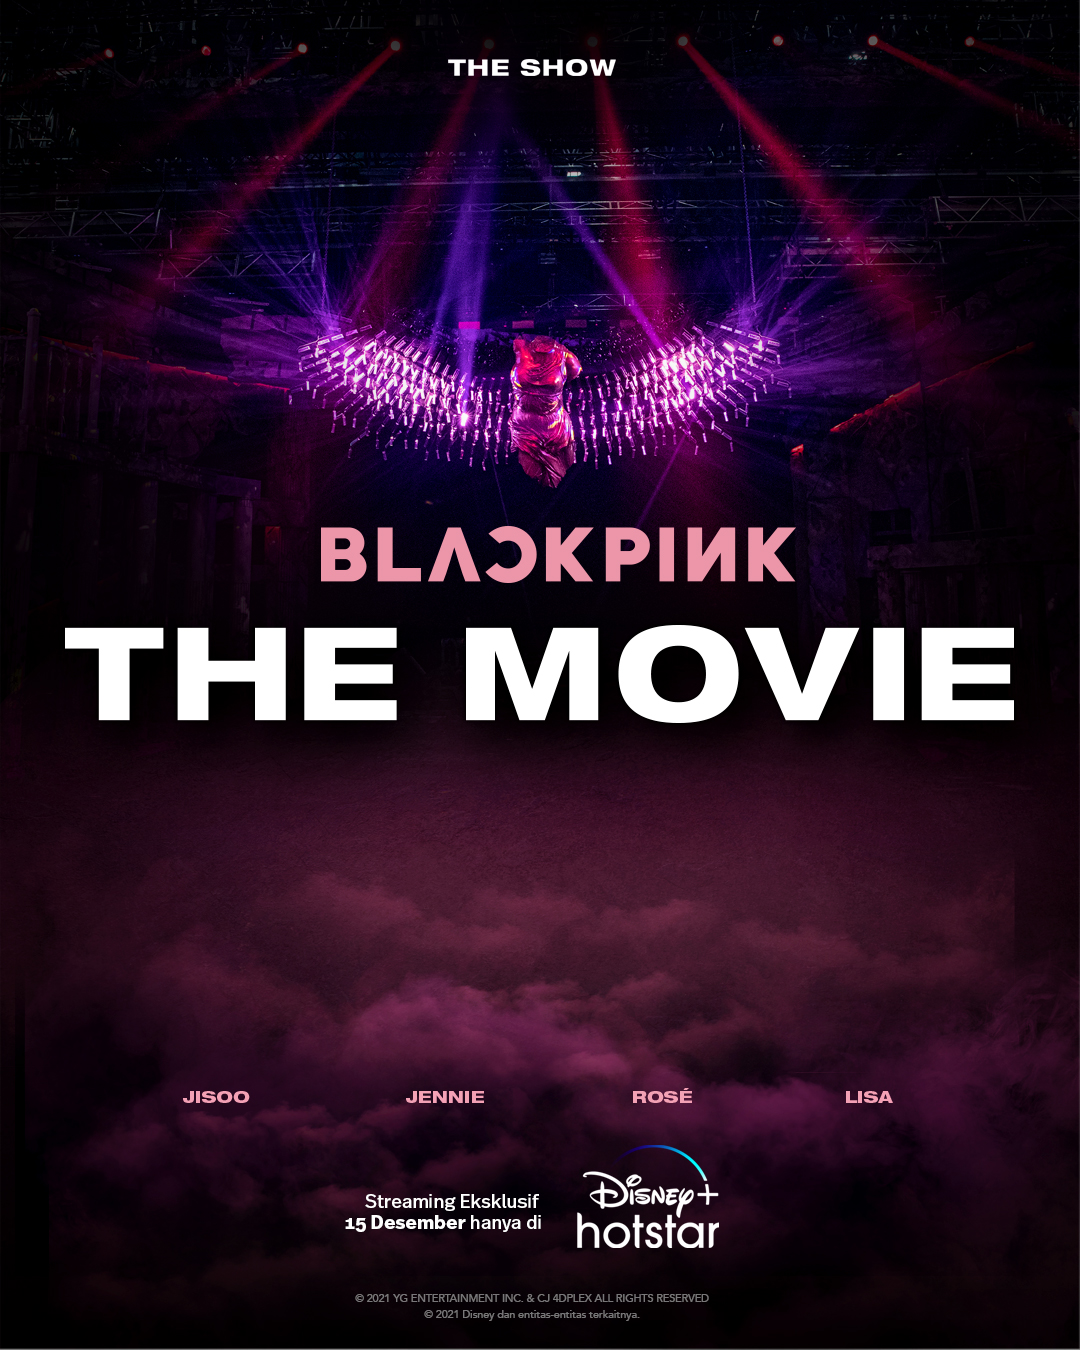 BLACKPINK: The Movie Tayang di Disney+ Hotstar 15 Desember